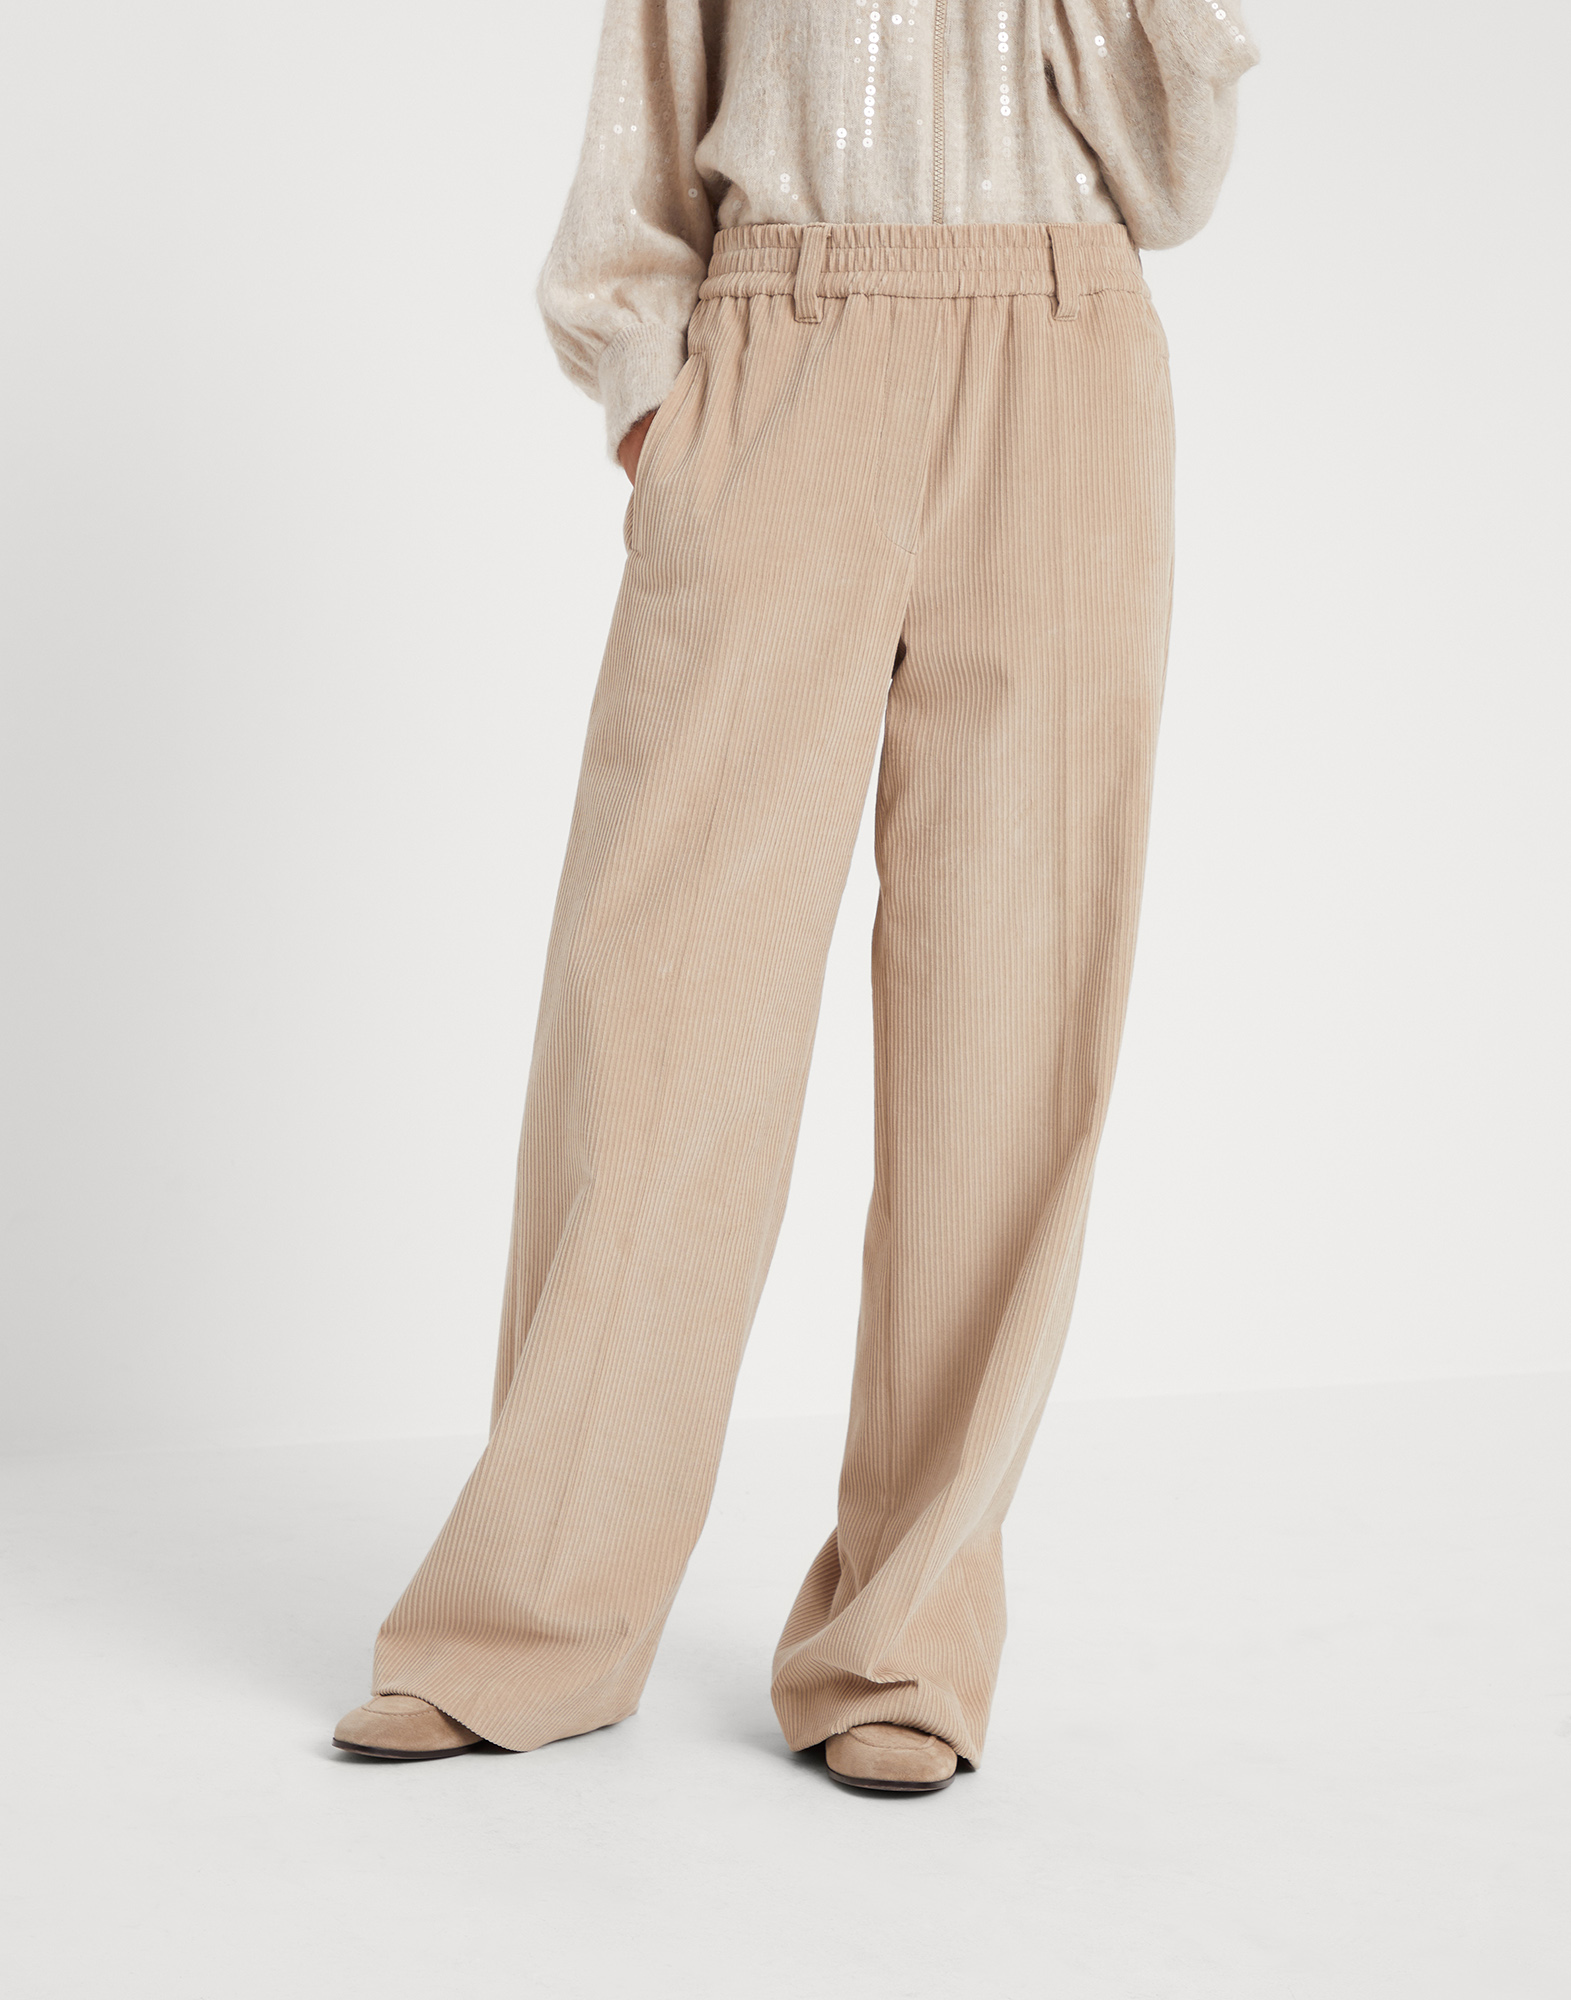 Pyjama-style trousers